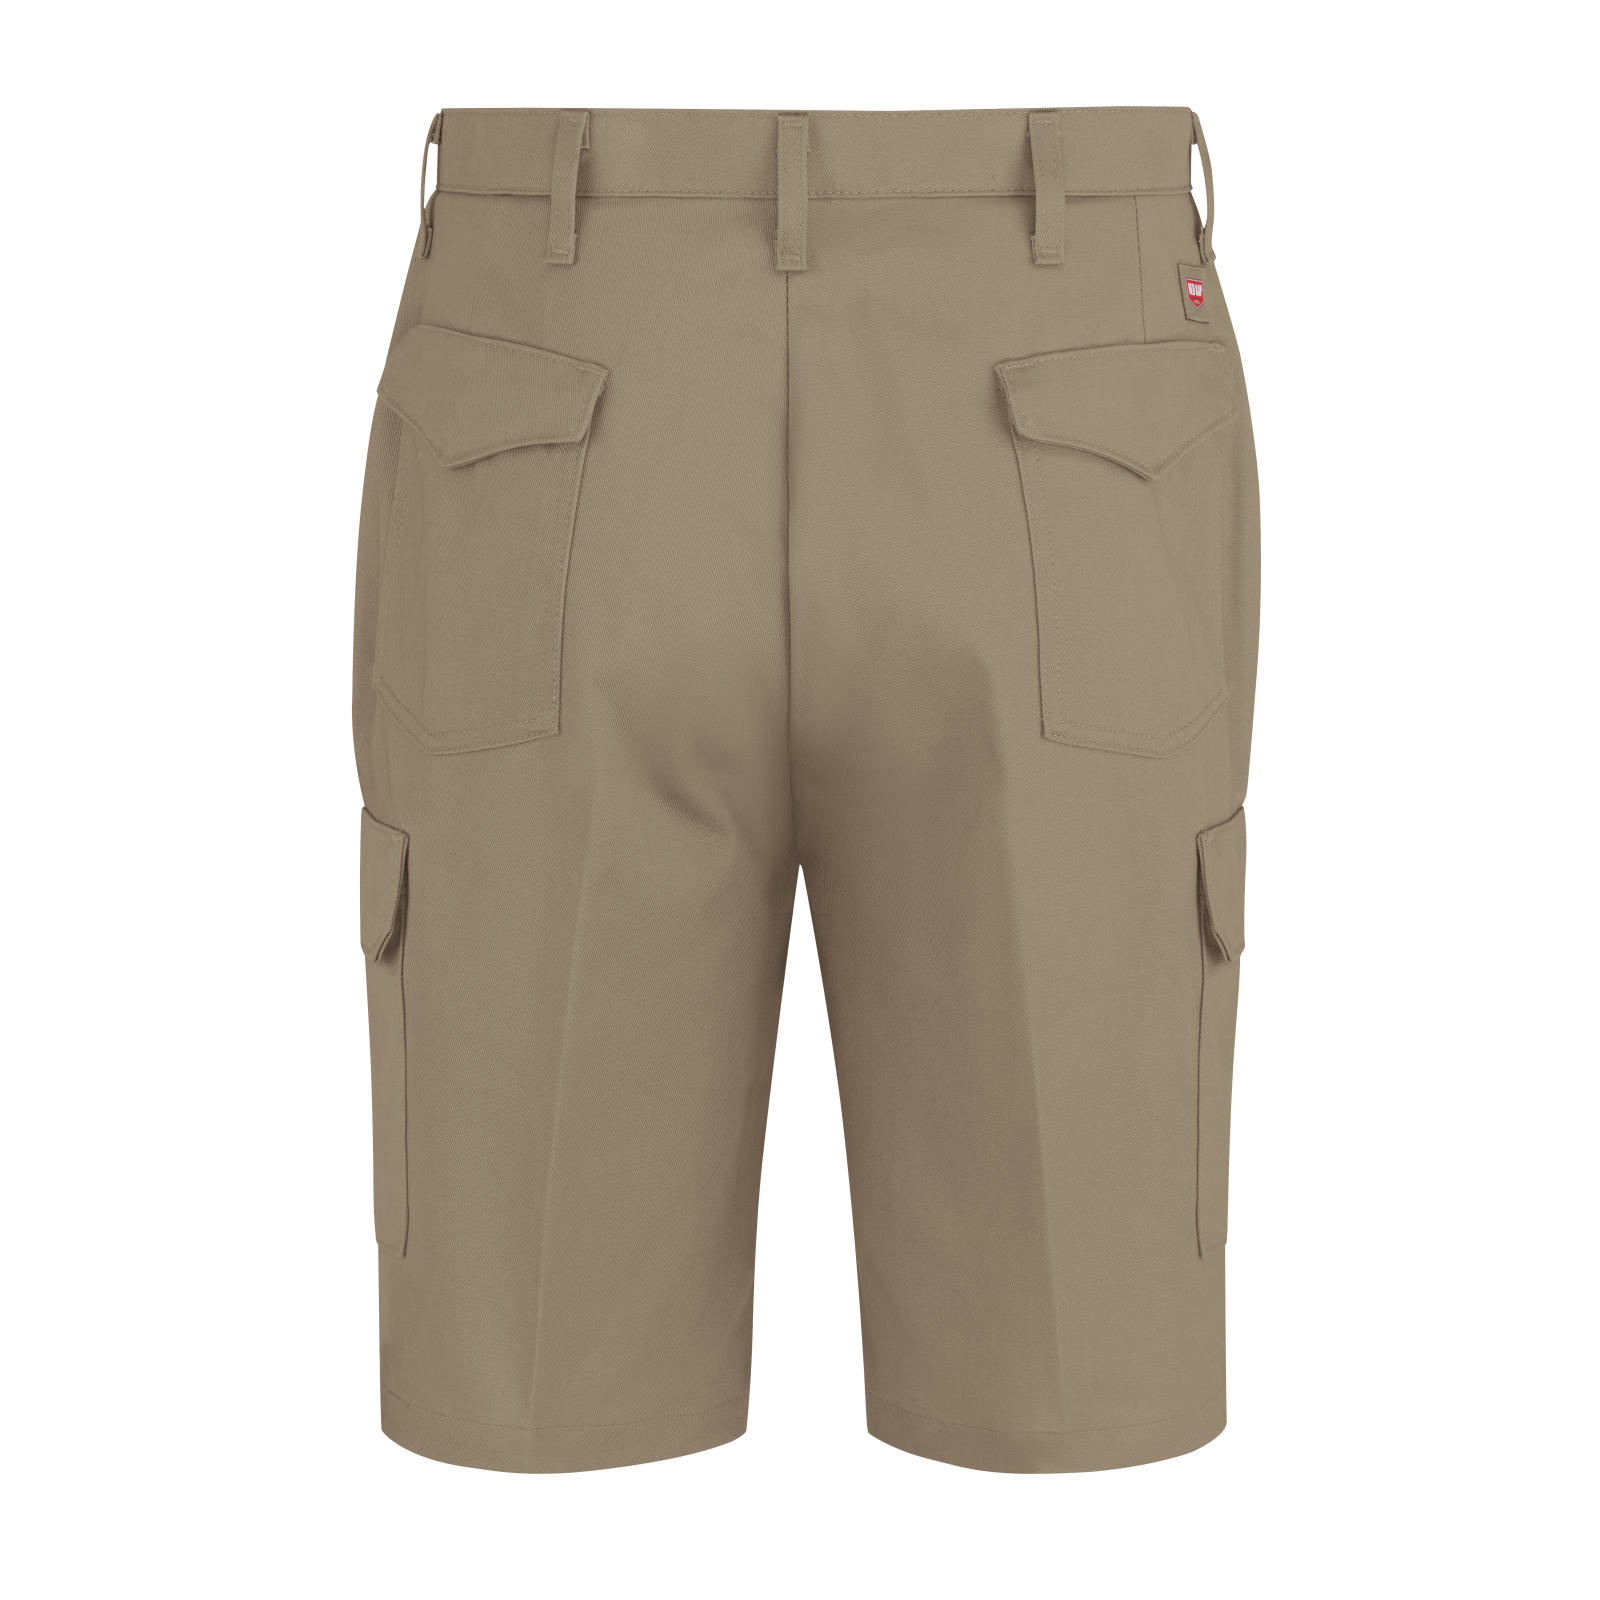 Cargo Shorts Men's Medium Gray 8 pockets Casual 100% Cotton Twill Ret $44 New 